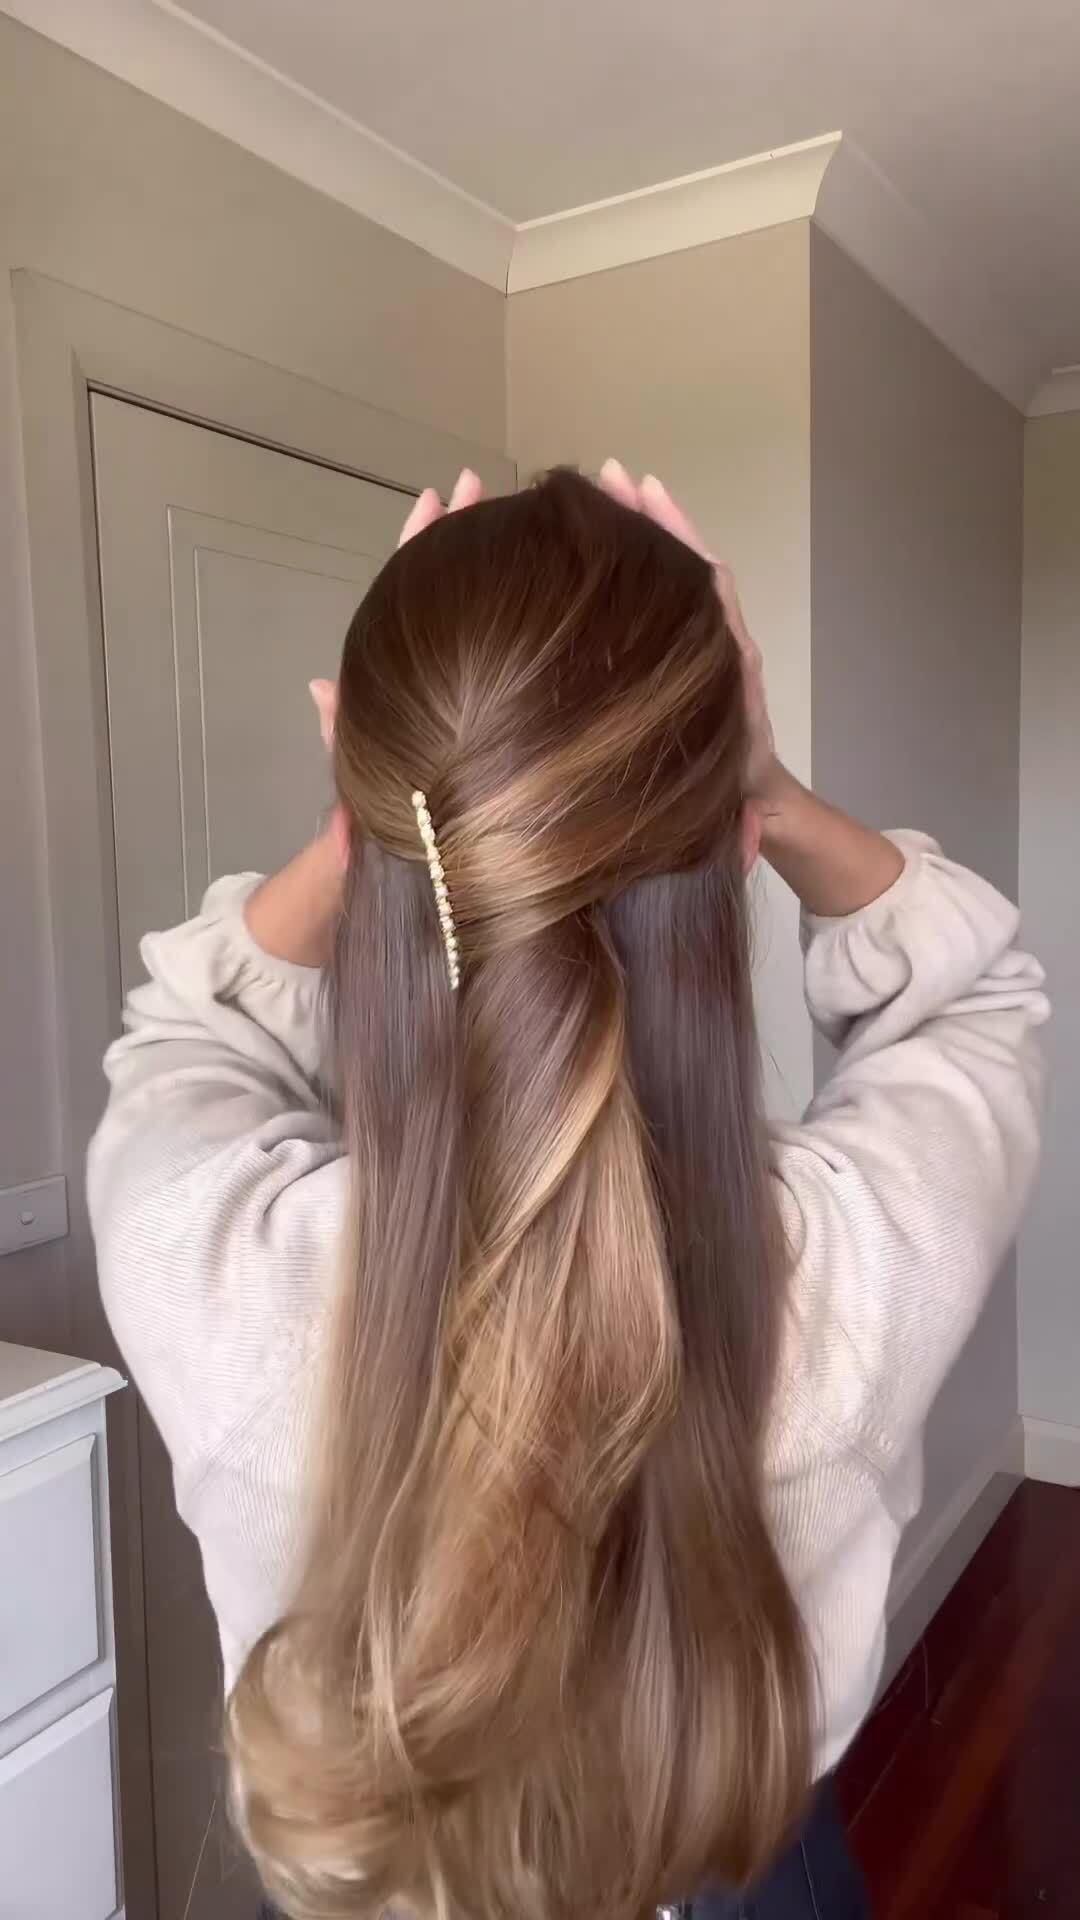 Beautiful hairstyle